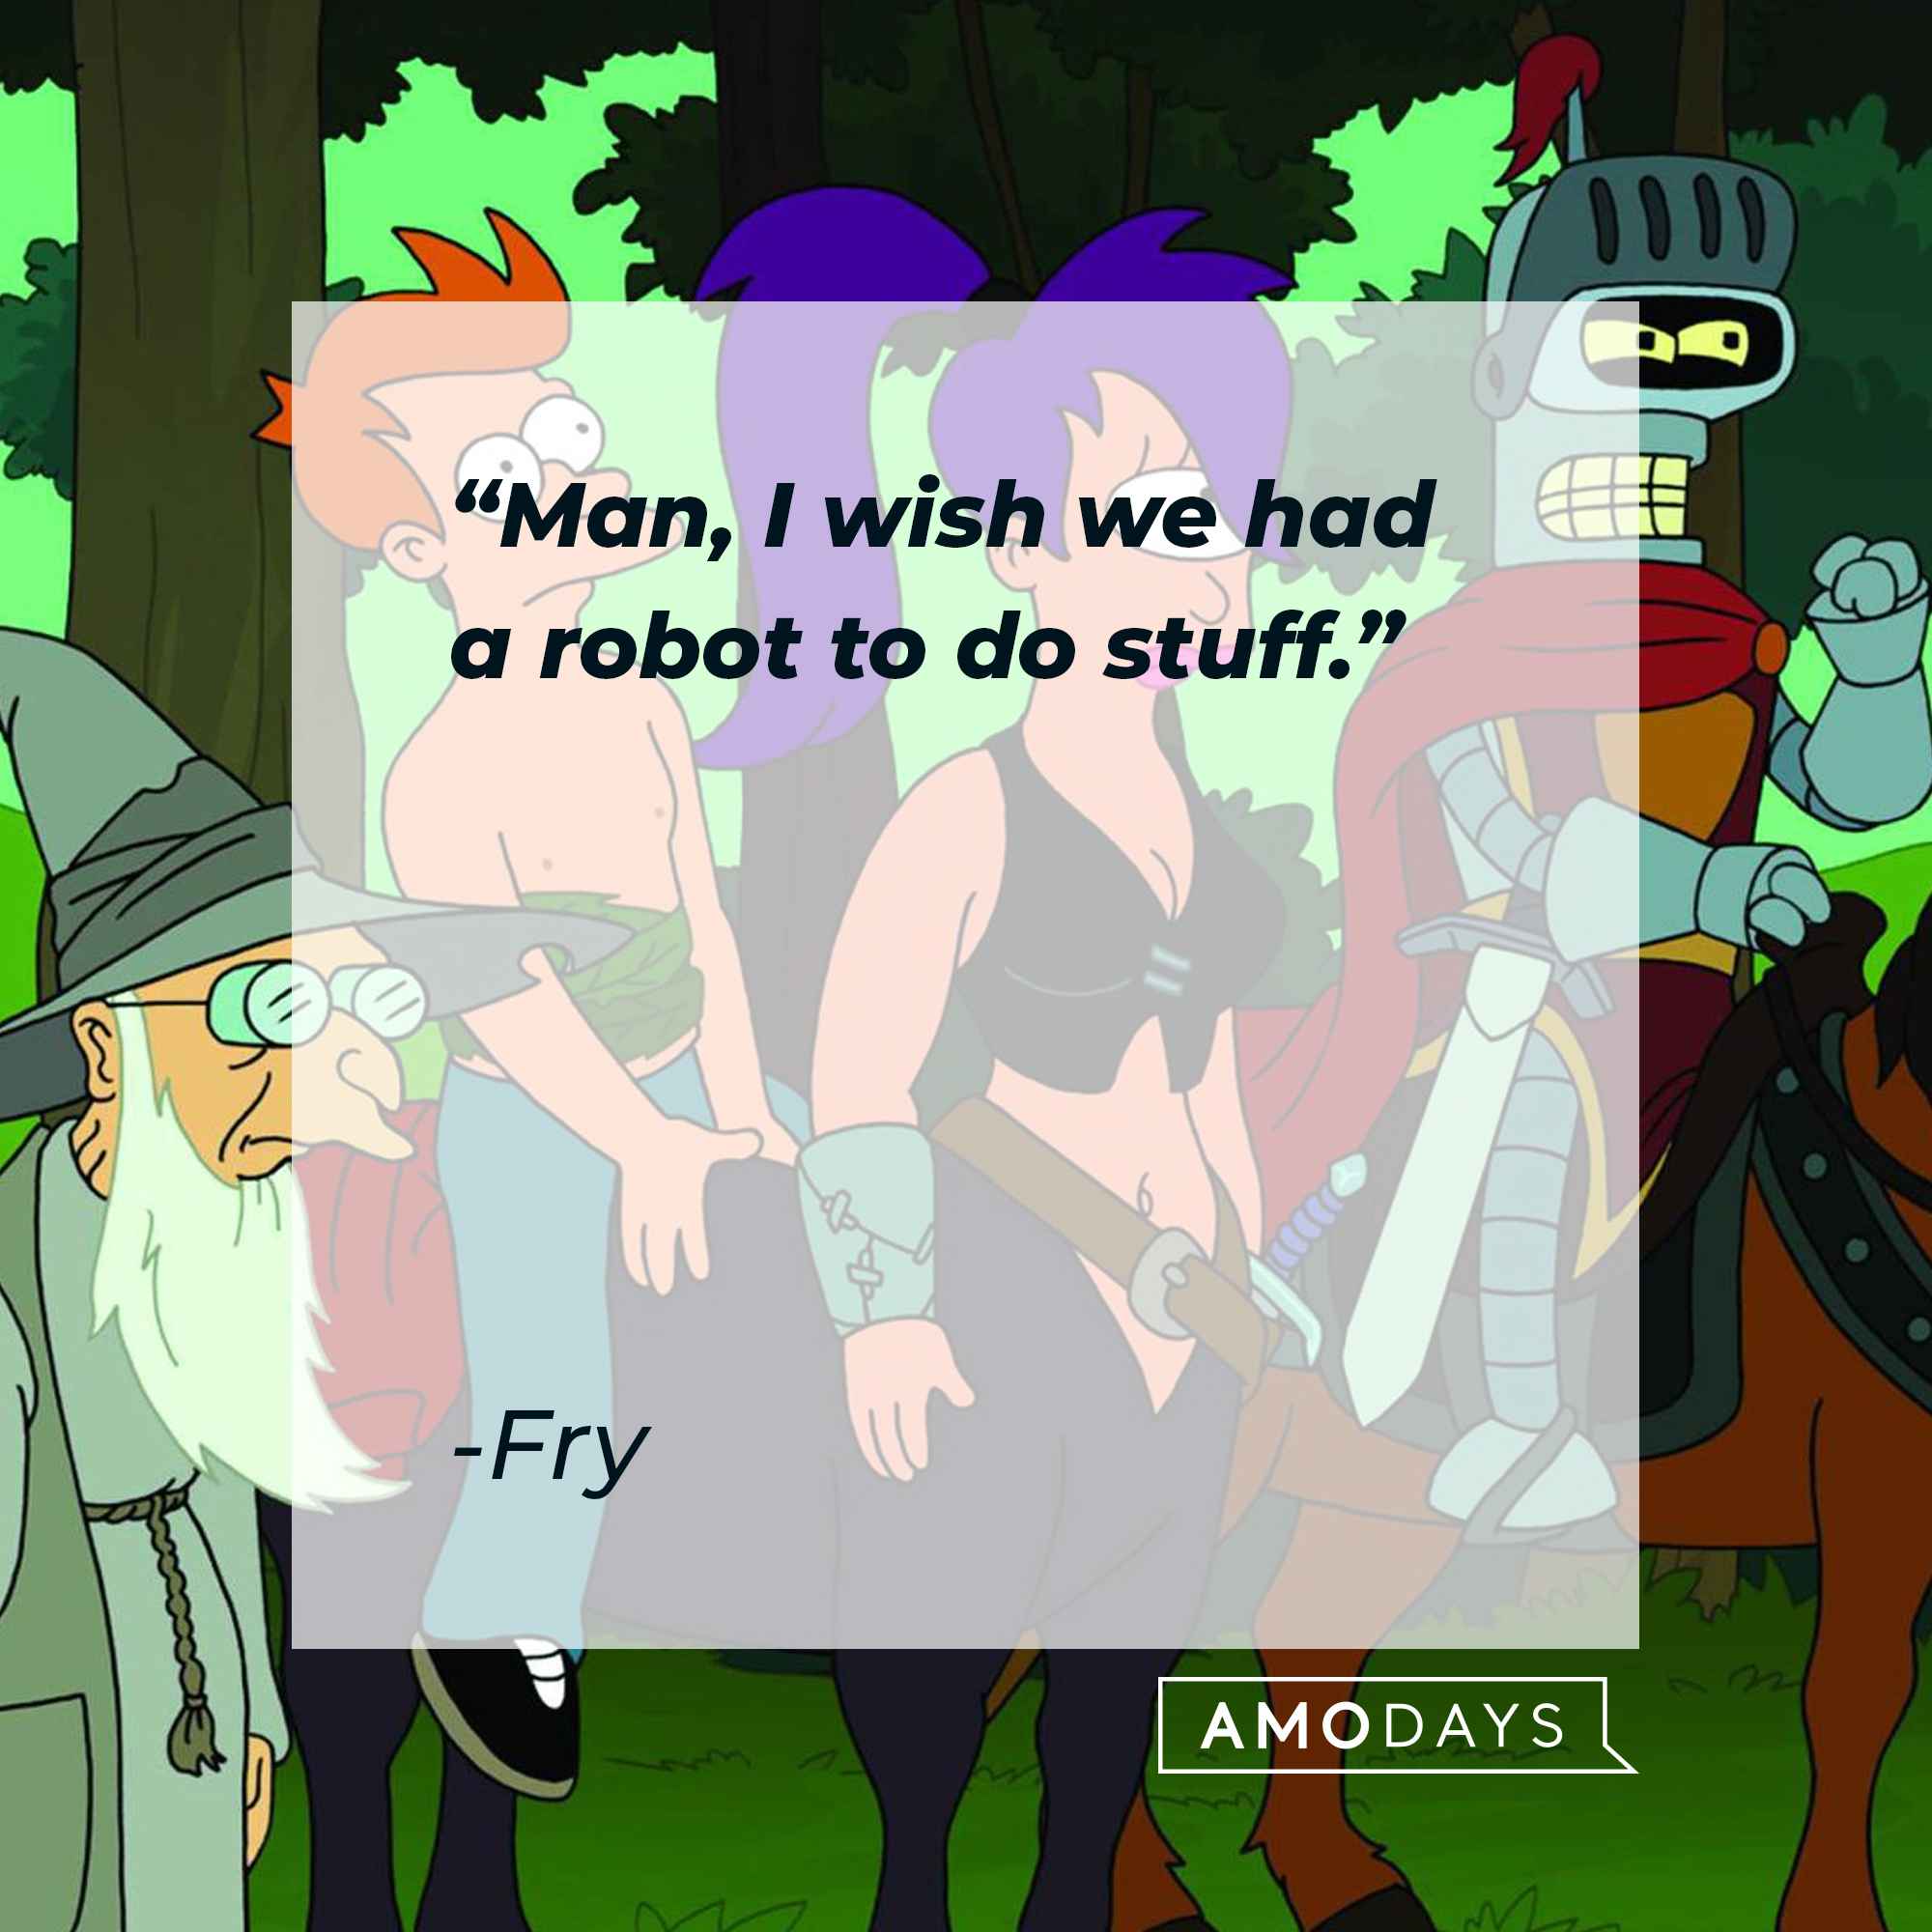 Fry Futurama's quote: "Man, I wish we had a robot to do stuff." | Source: Facebook.com/Futurama